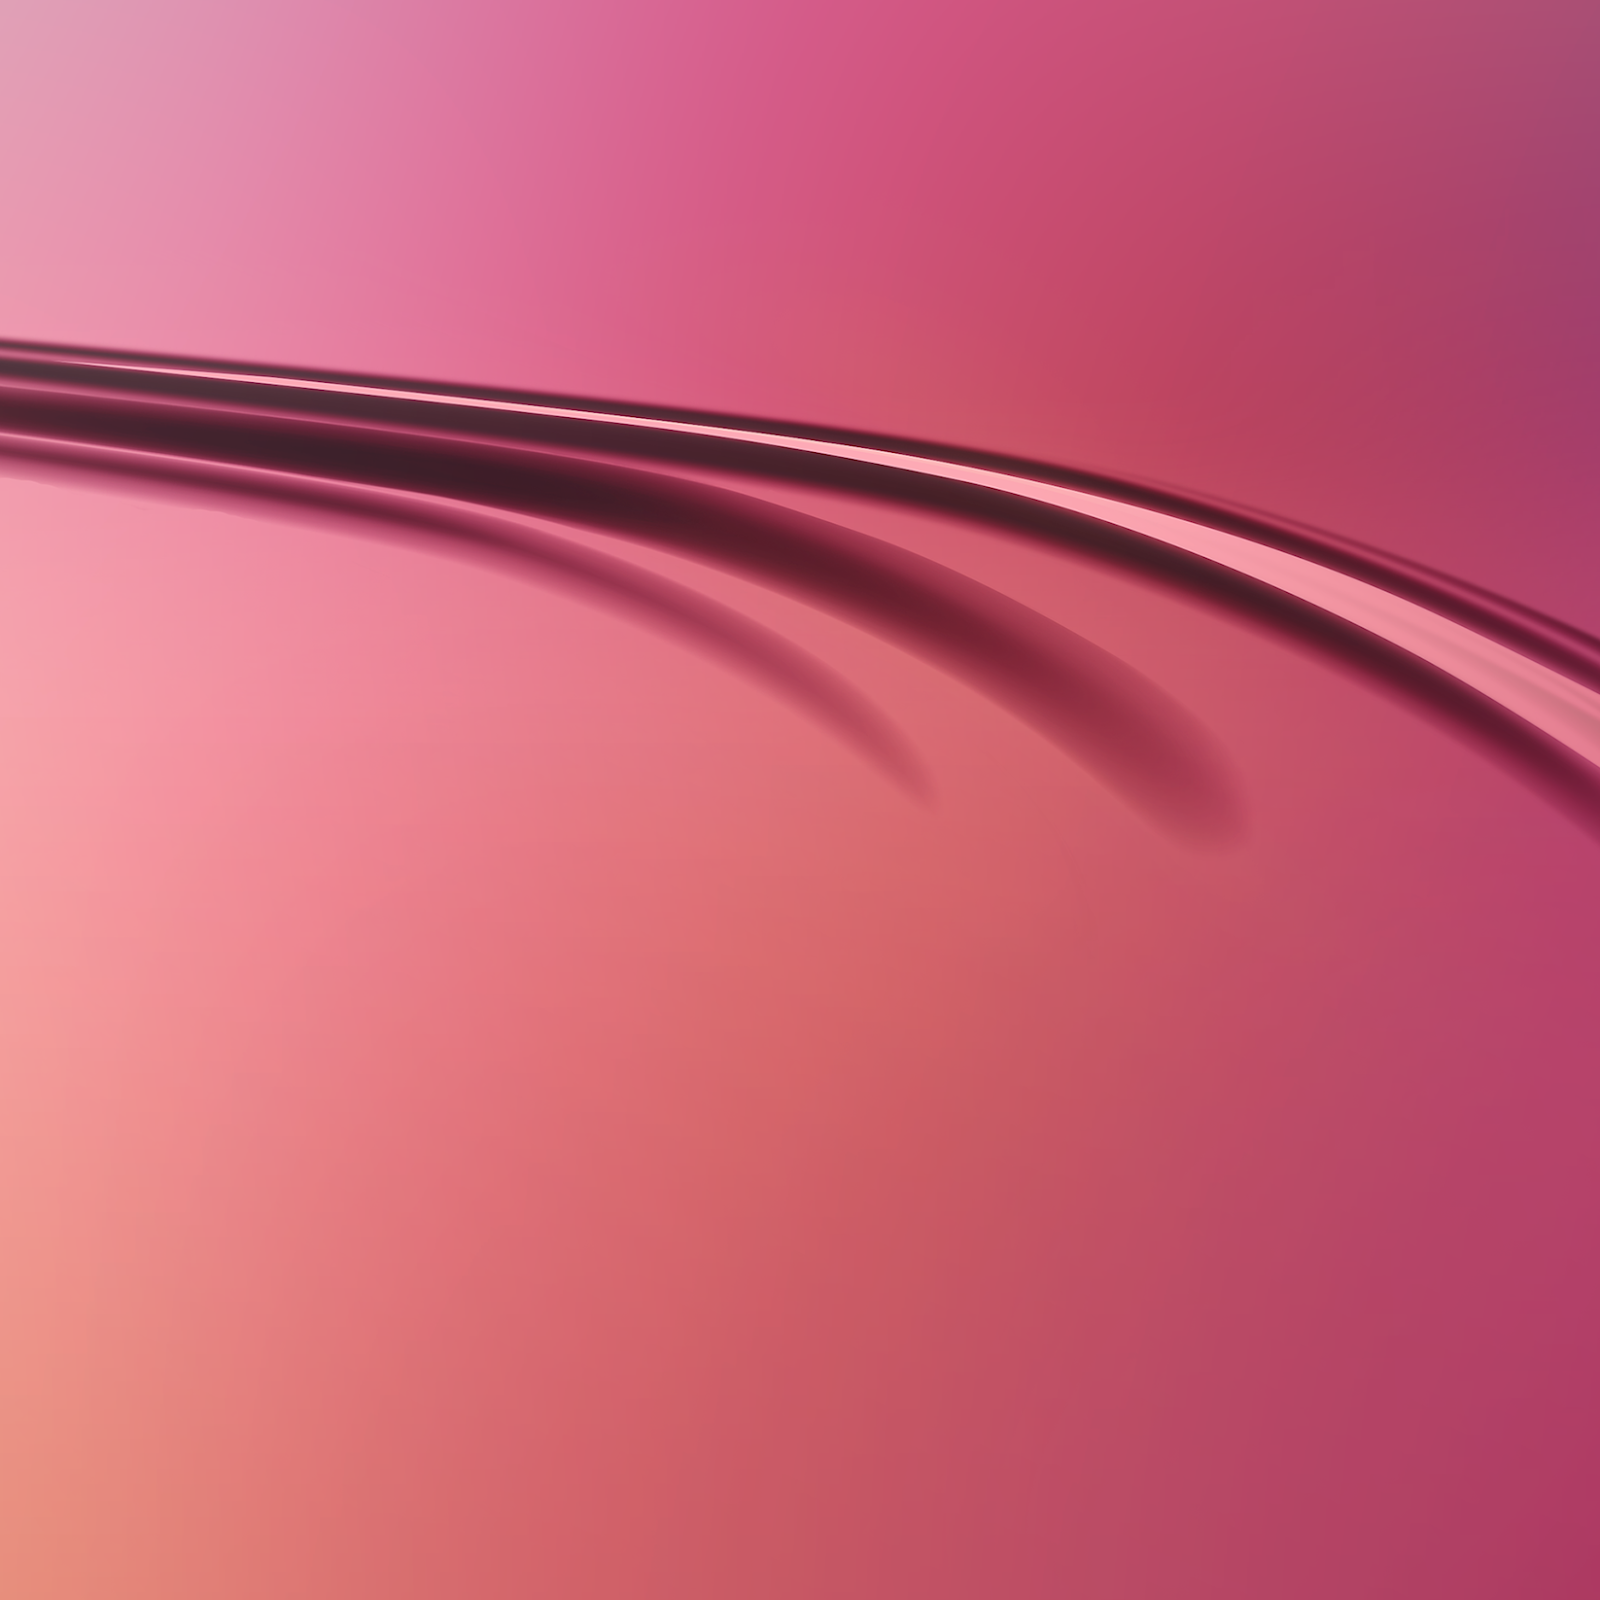 samsung c7 fondo de pantalla,rosado,rojo,violeta,línea,de cerca